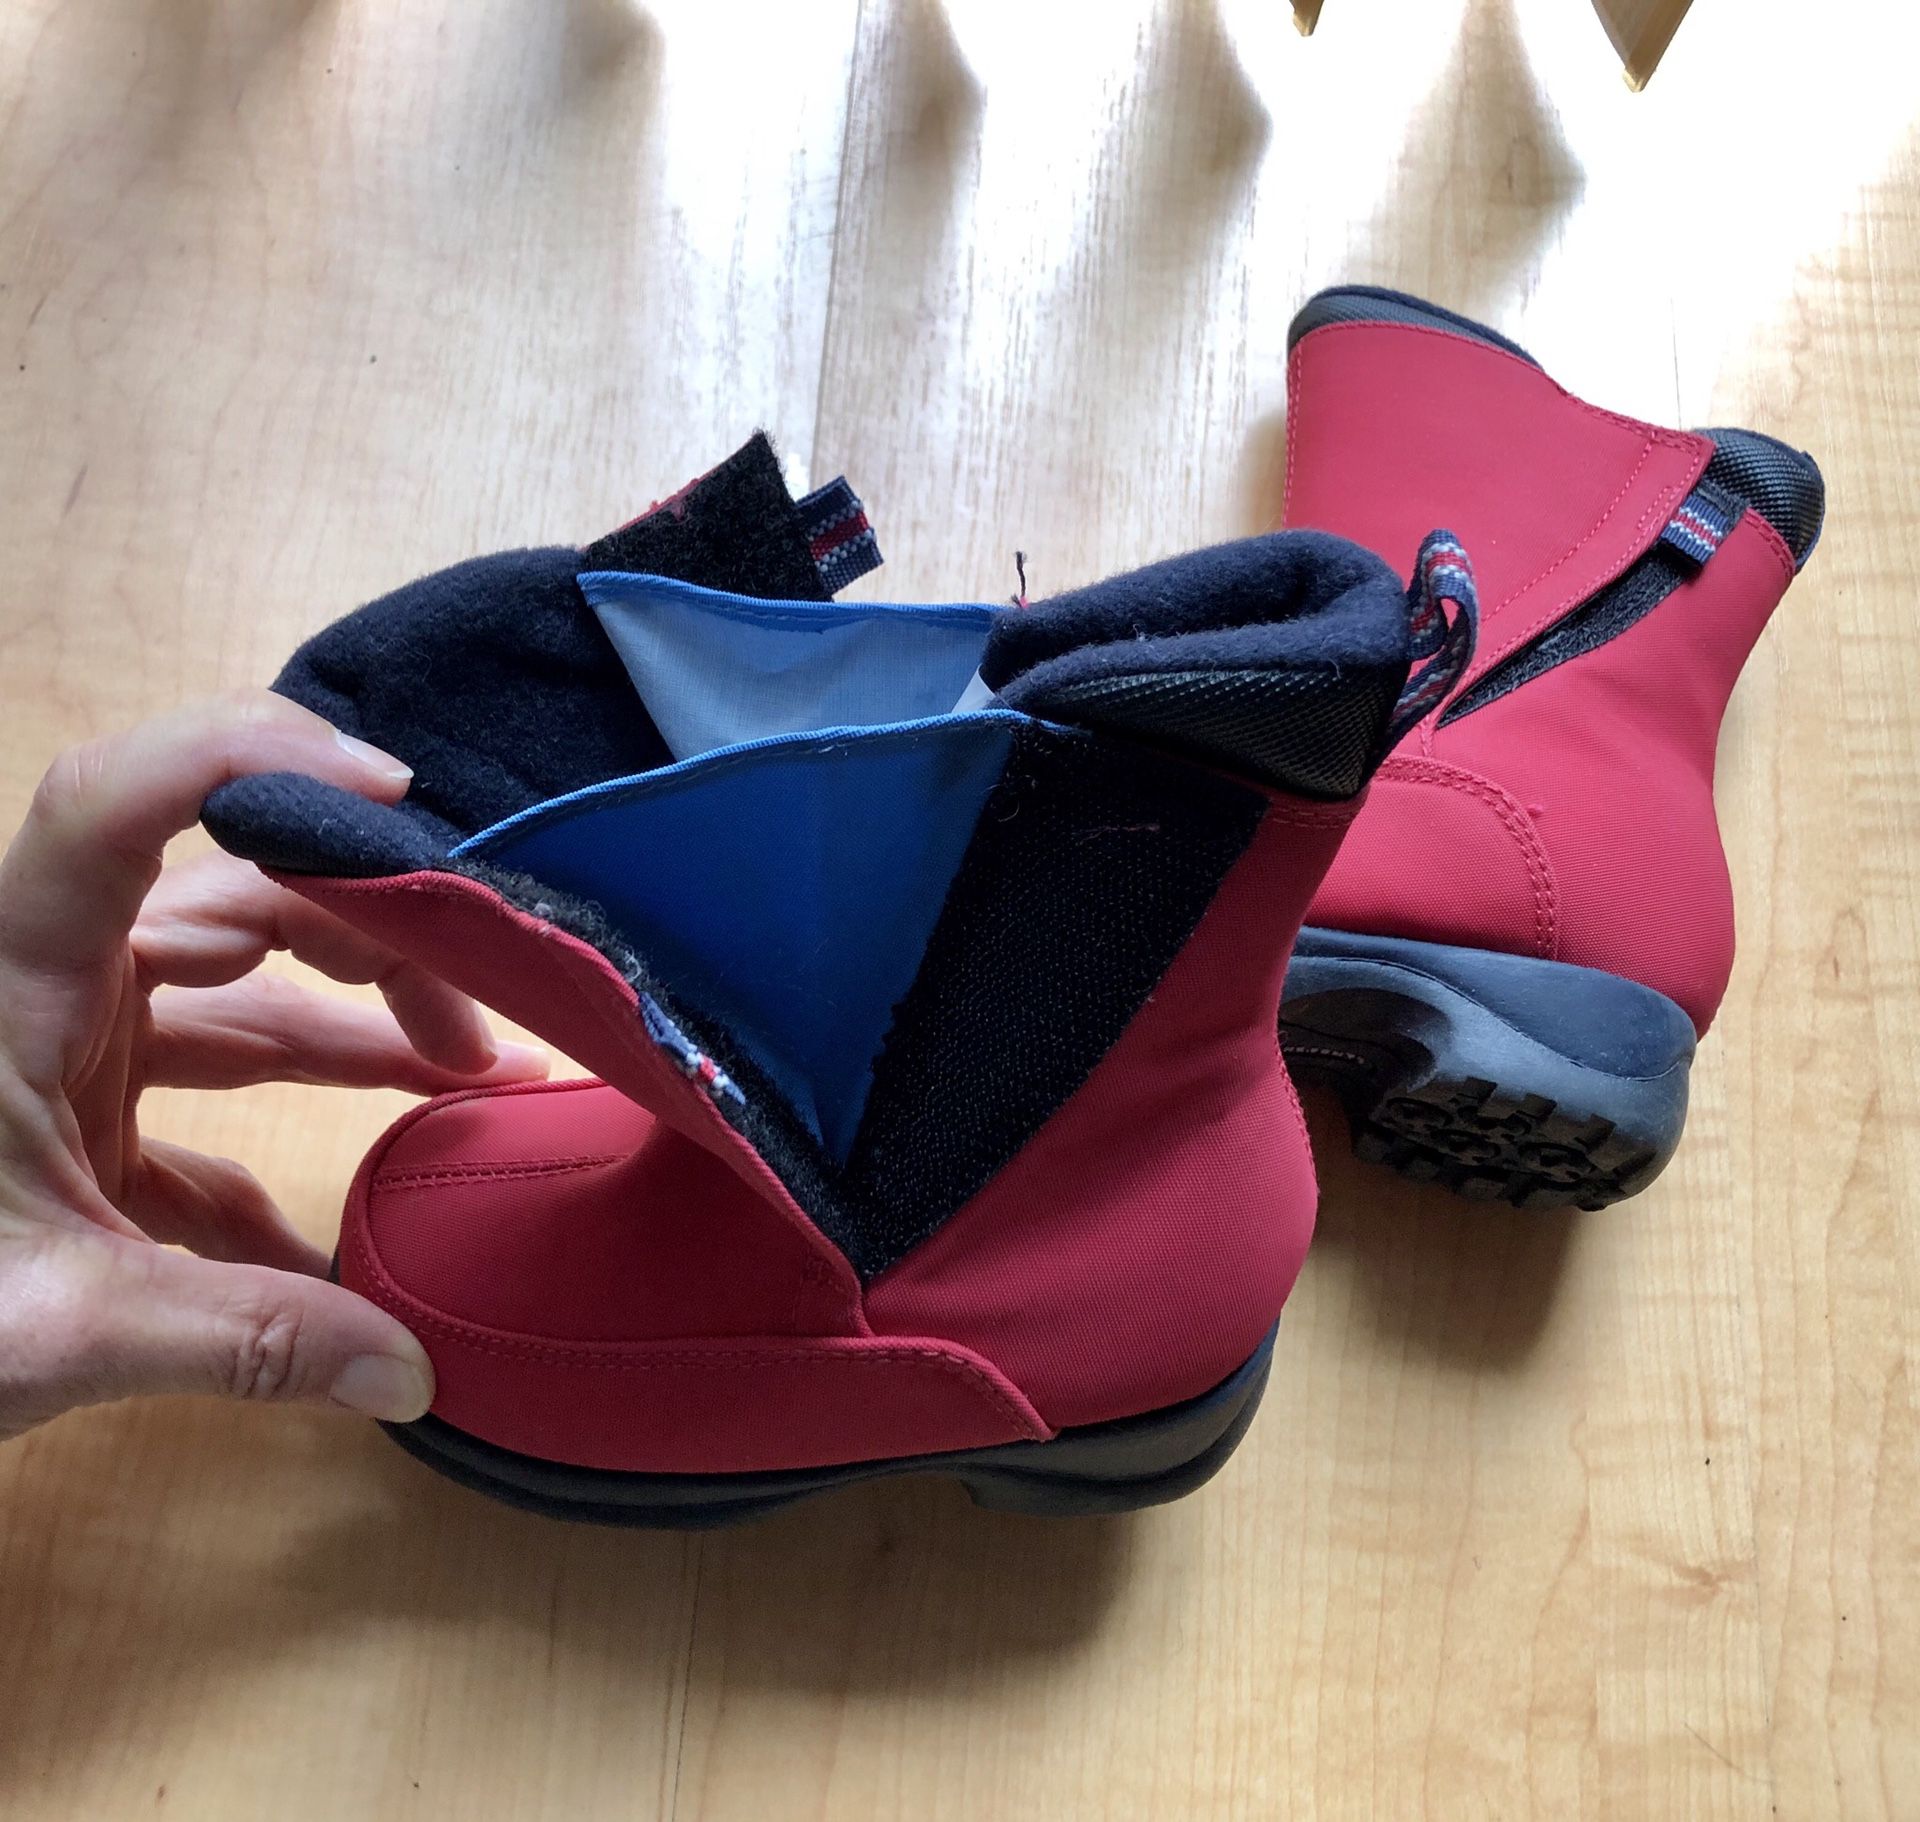 Toddler rain & snow boots — Lands End Snow Flurry Boots